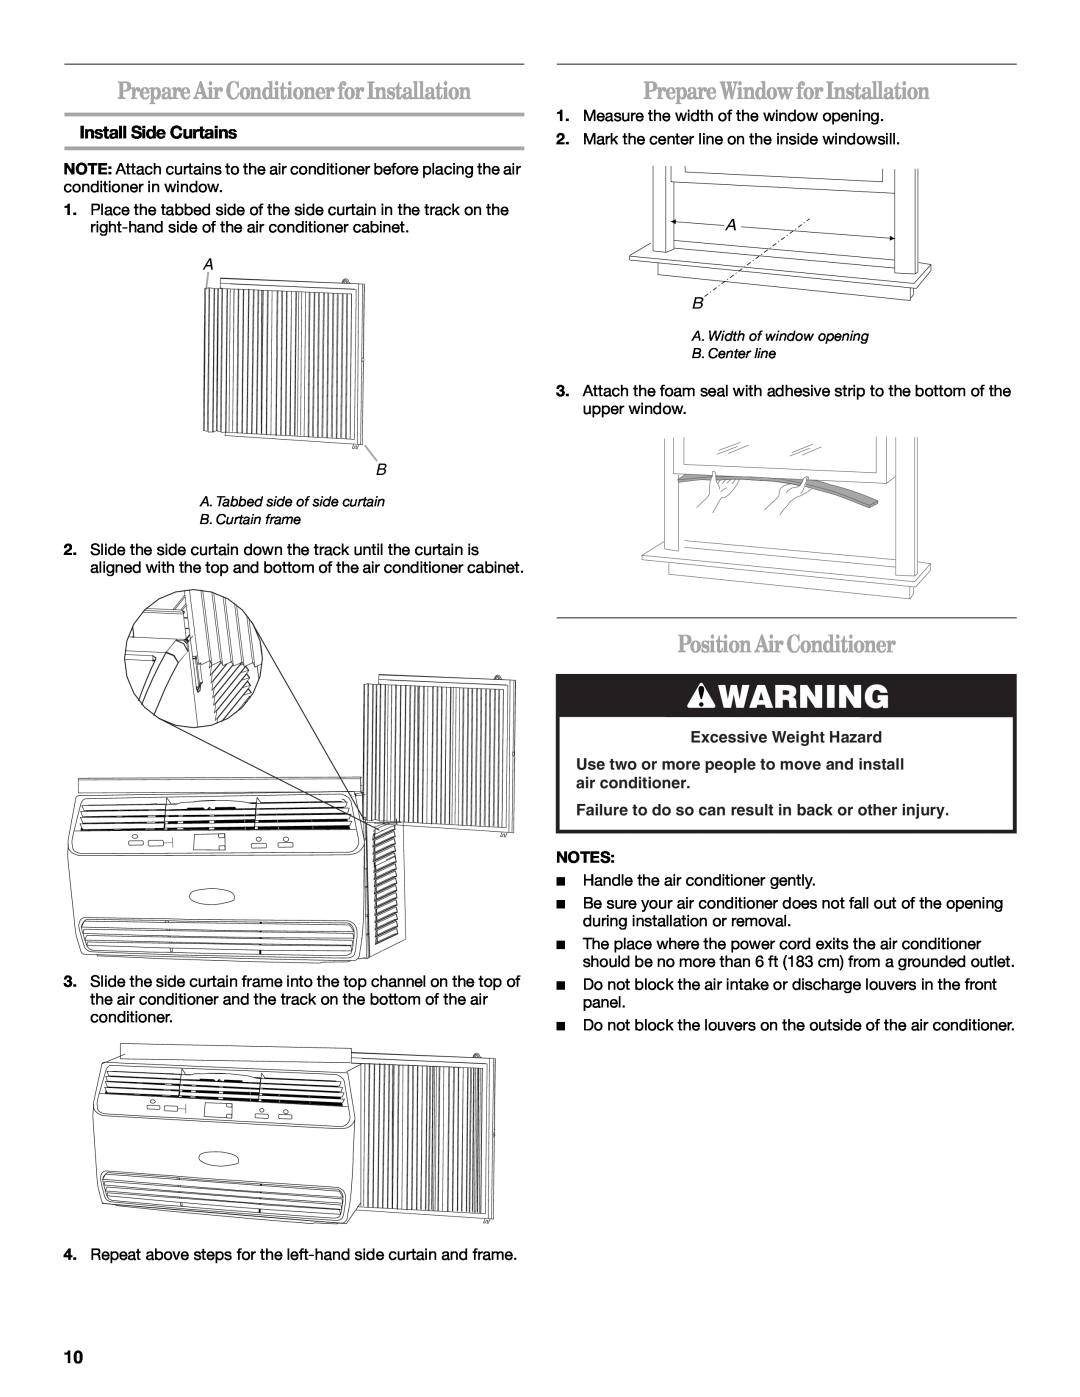 Whirlpool 66161279 Prepare Air Conditioner for Installation, Prepare Window for Installation, Position Air Conditioner 